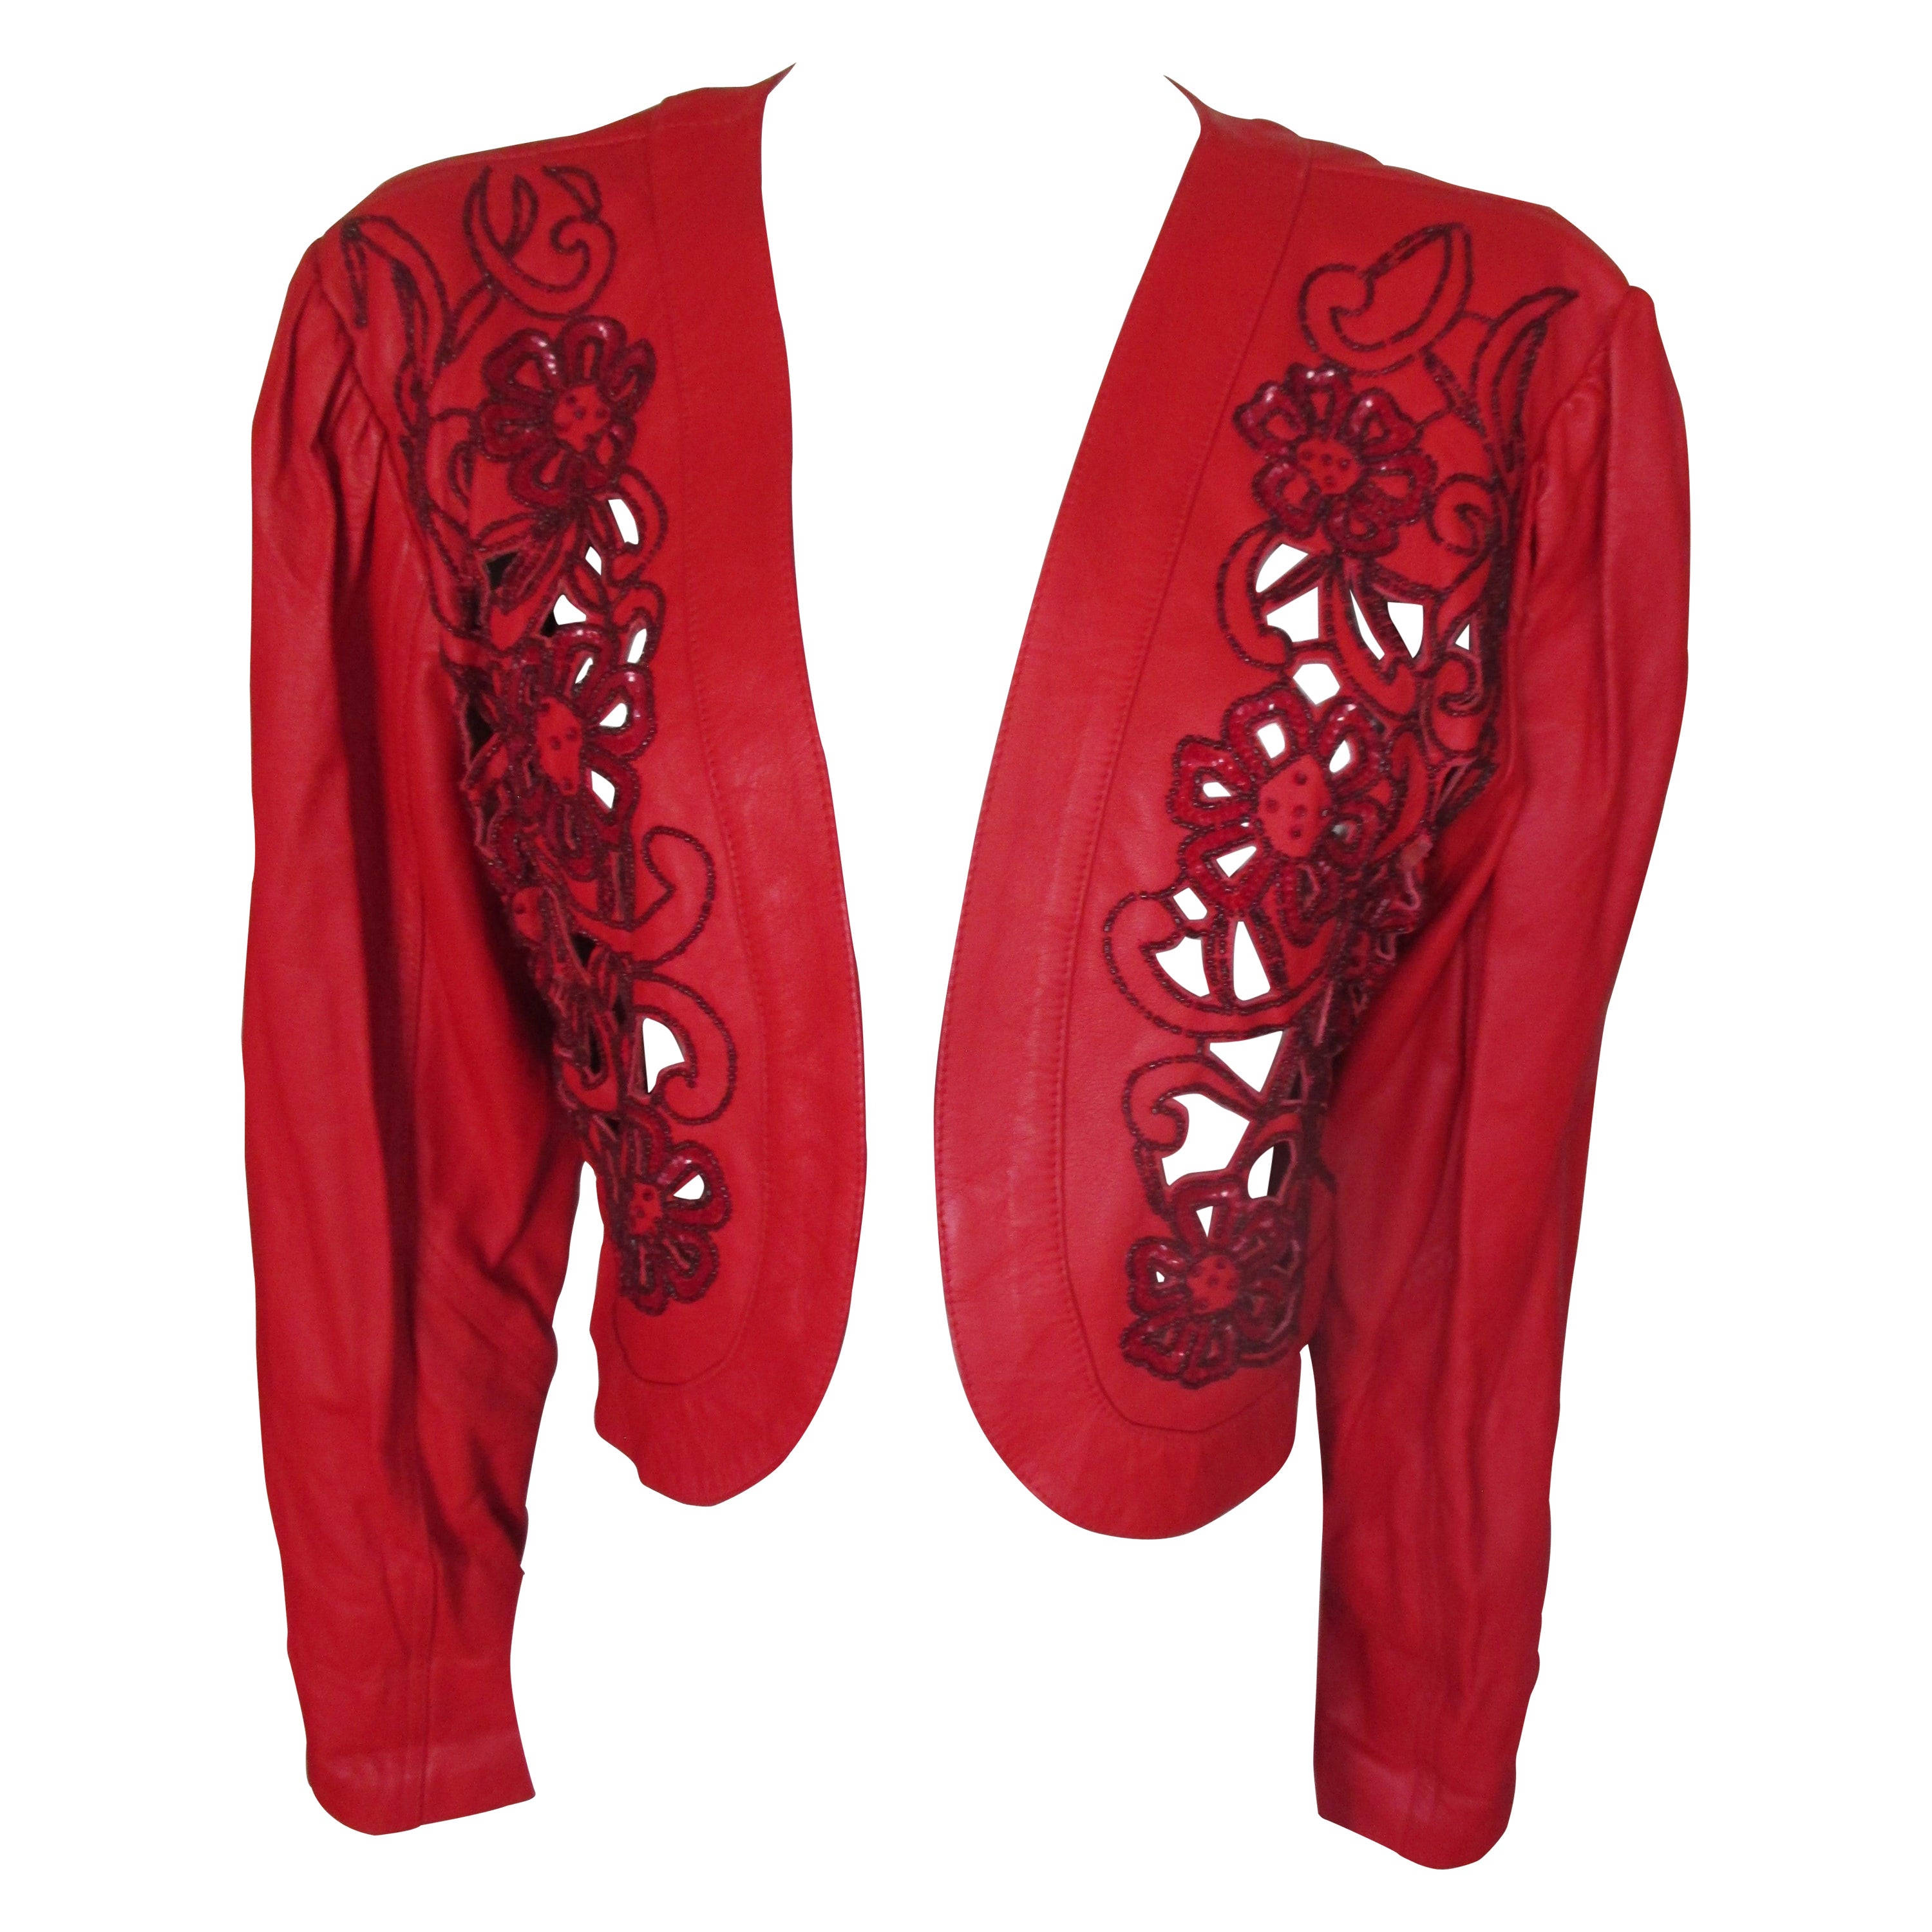 Embroidered Beaded Red Leather Bolero Jacket